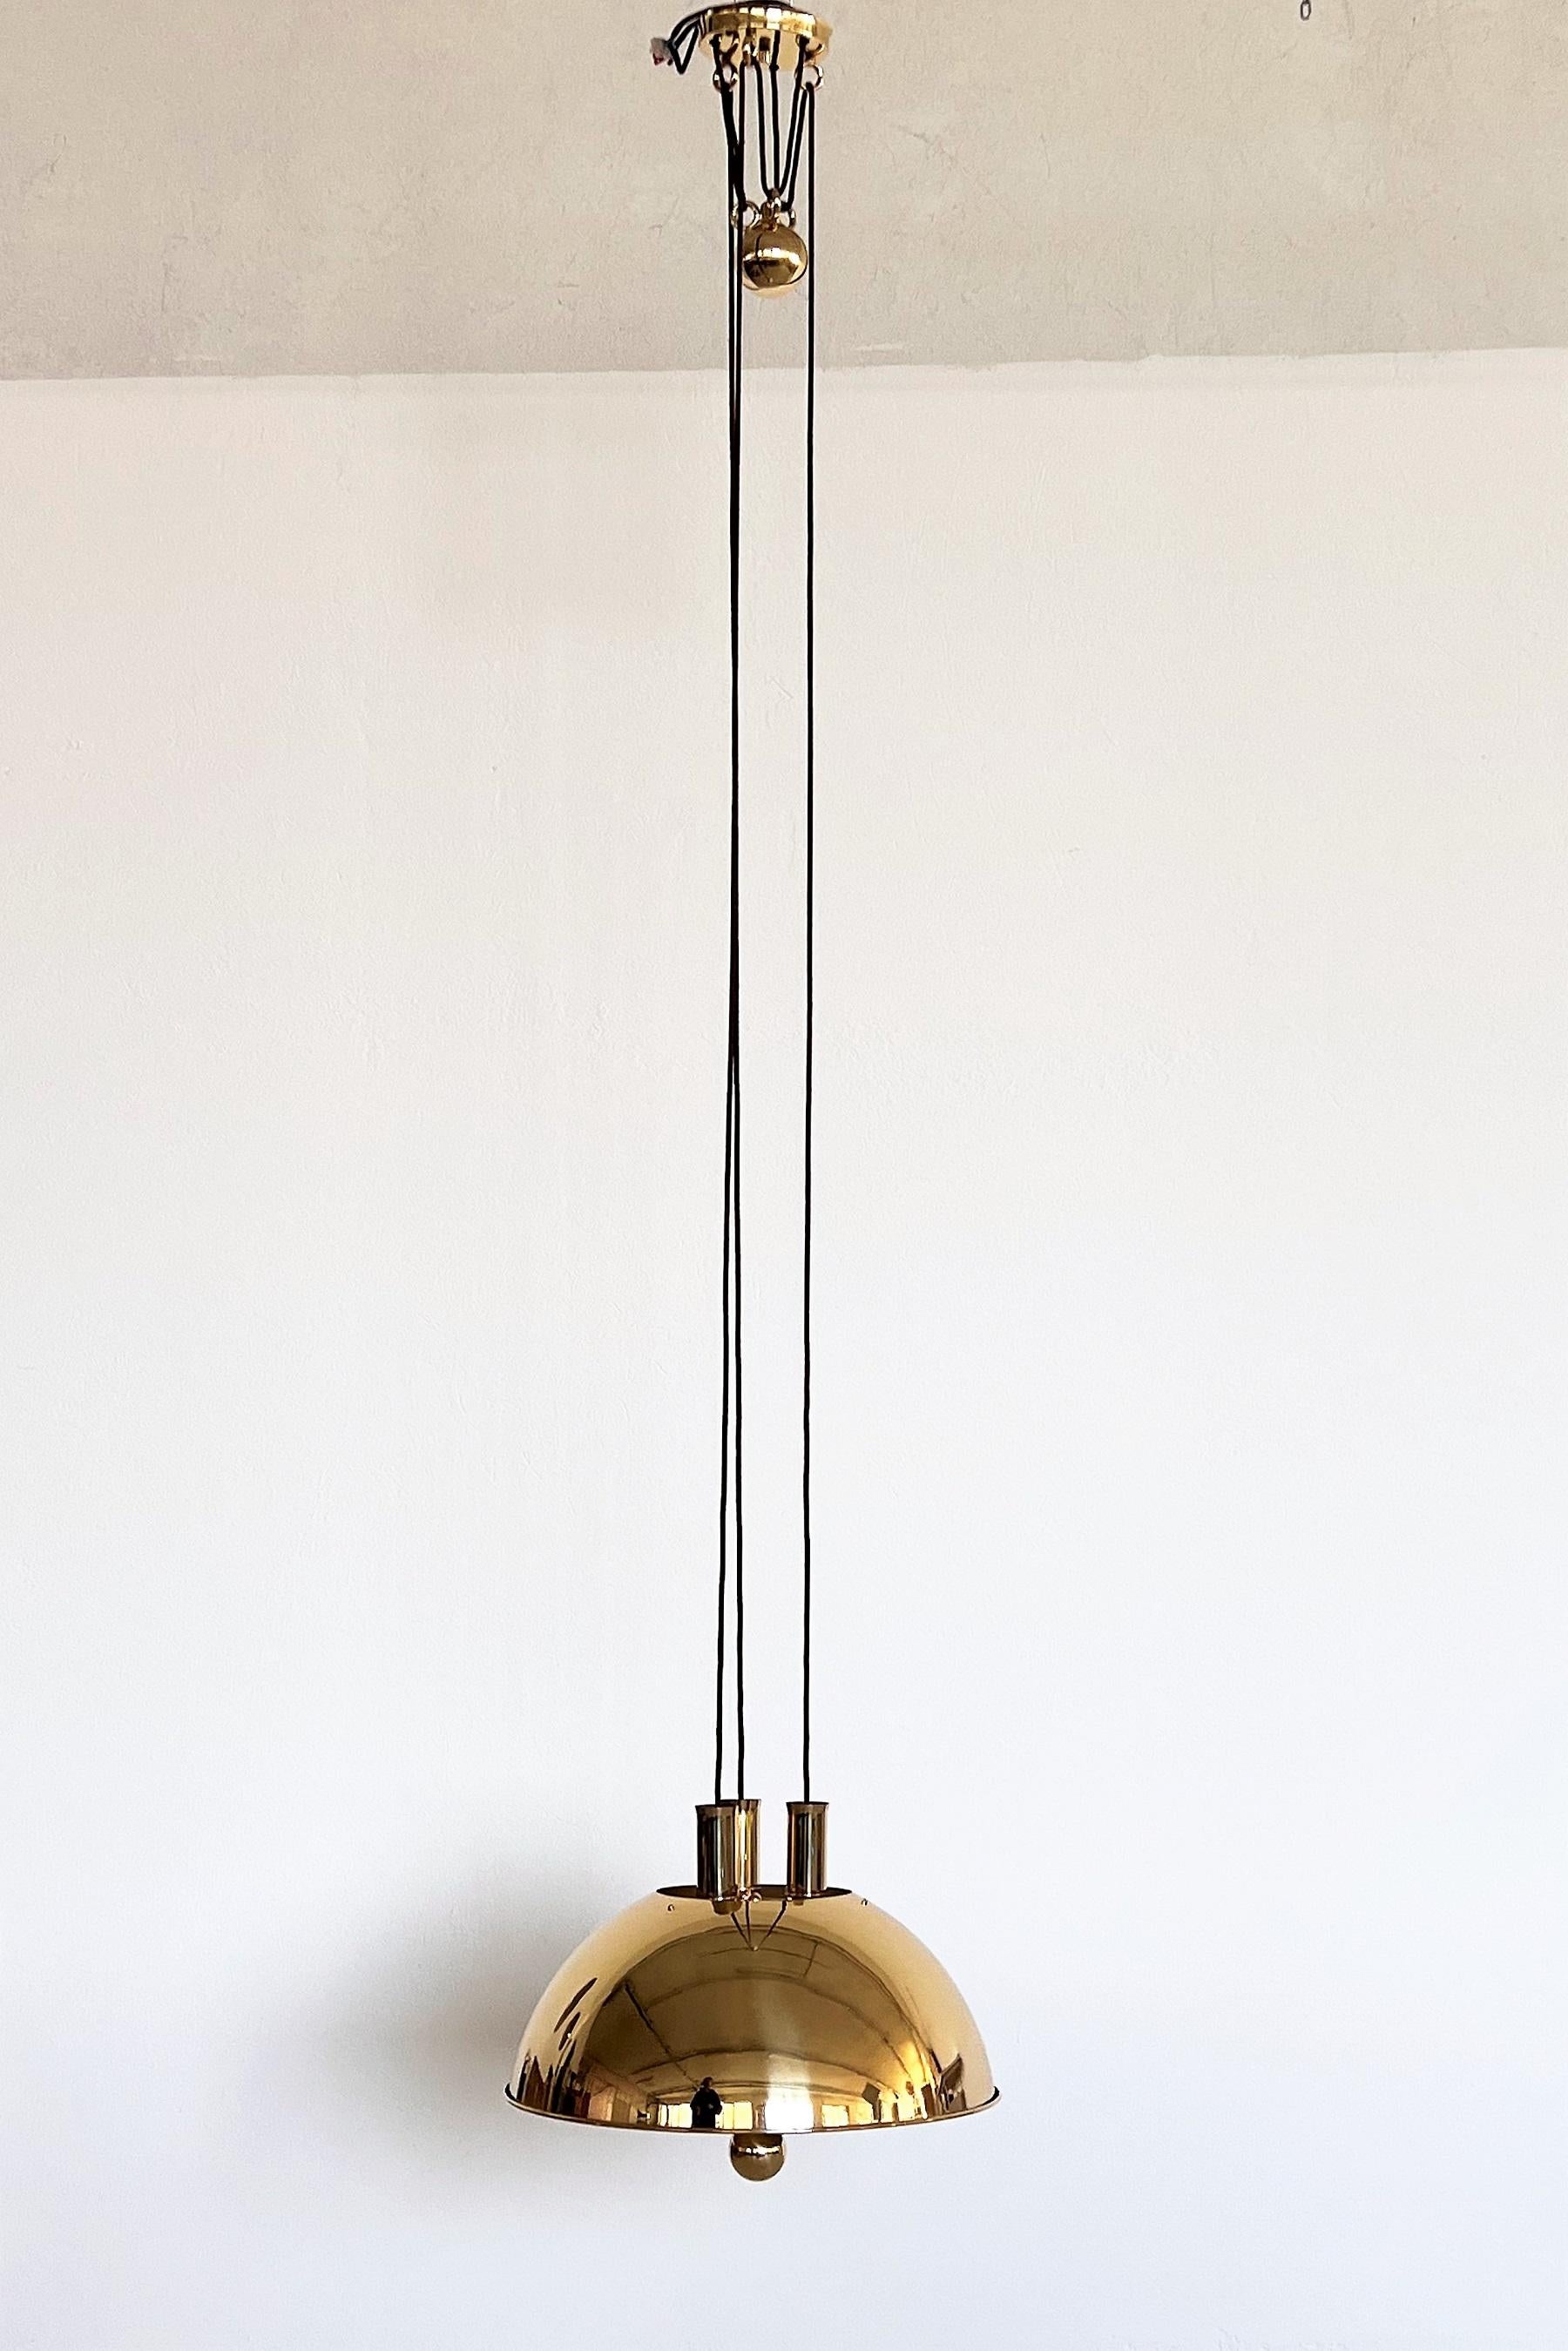 German Florian Schulz Rare Counter Balance Vintage Pendant Light in Brass, 1970 For Sale